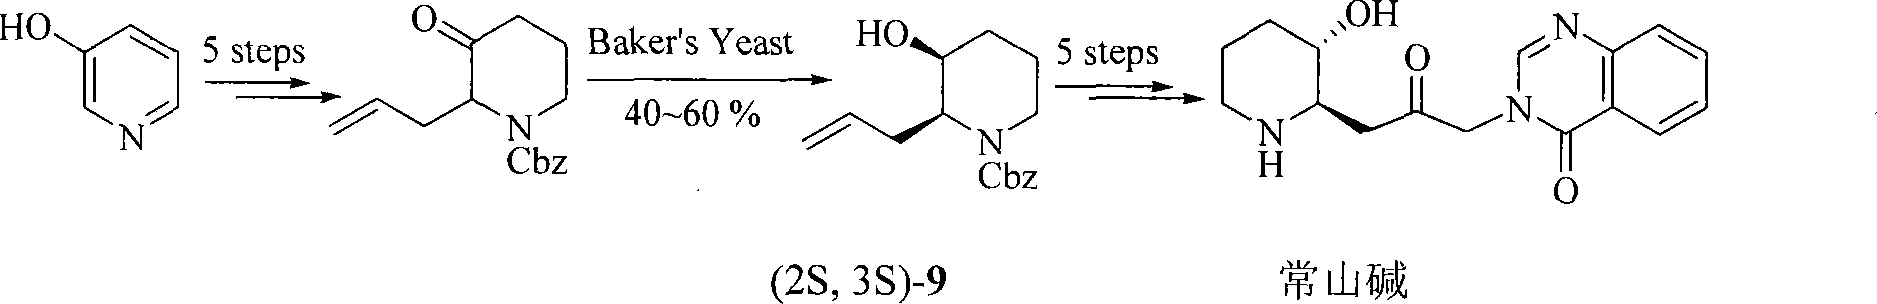 Process of synthesizing (2R, 3S)-3-alkyl siloxy-2-allyl-1-alkoxy carbonyl-pyridine